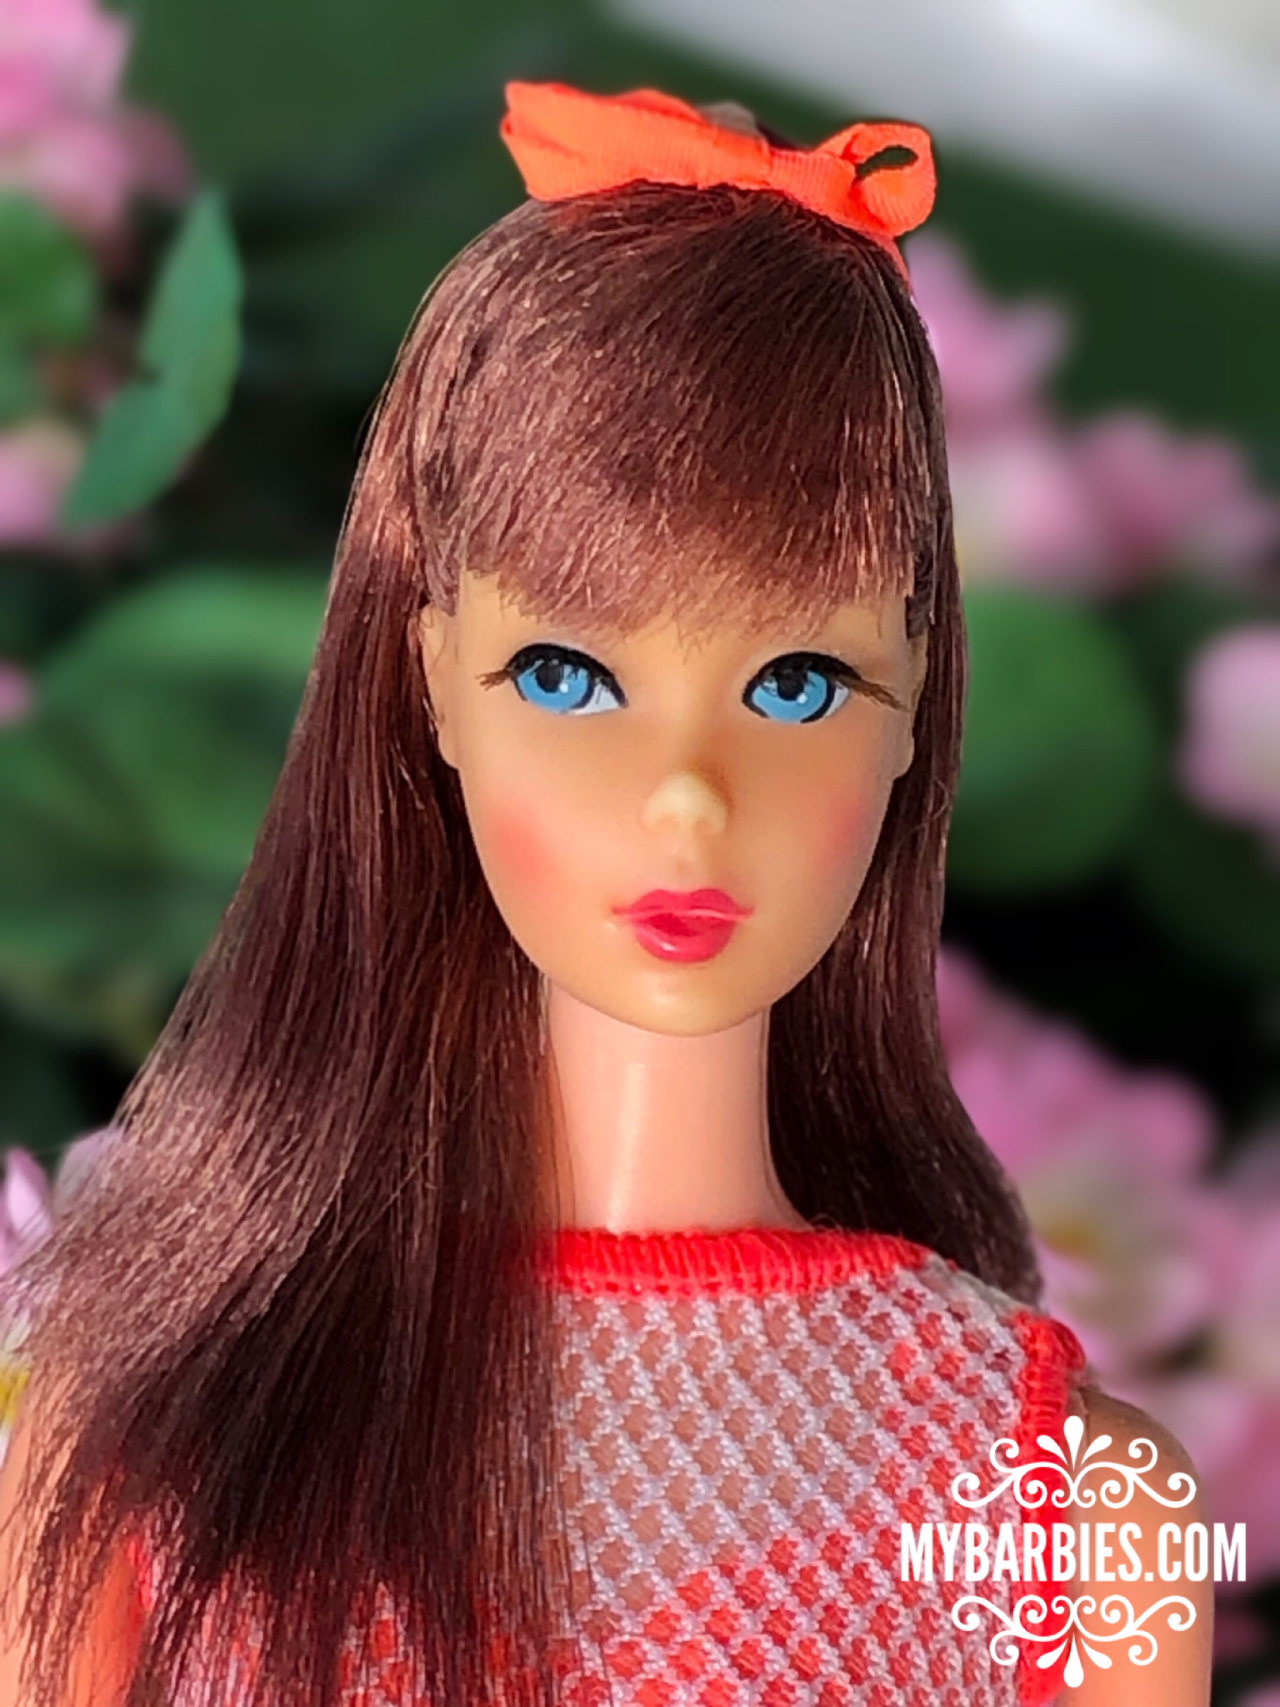 Barbie doll cherry pvs-hawaii.com: Barbie